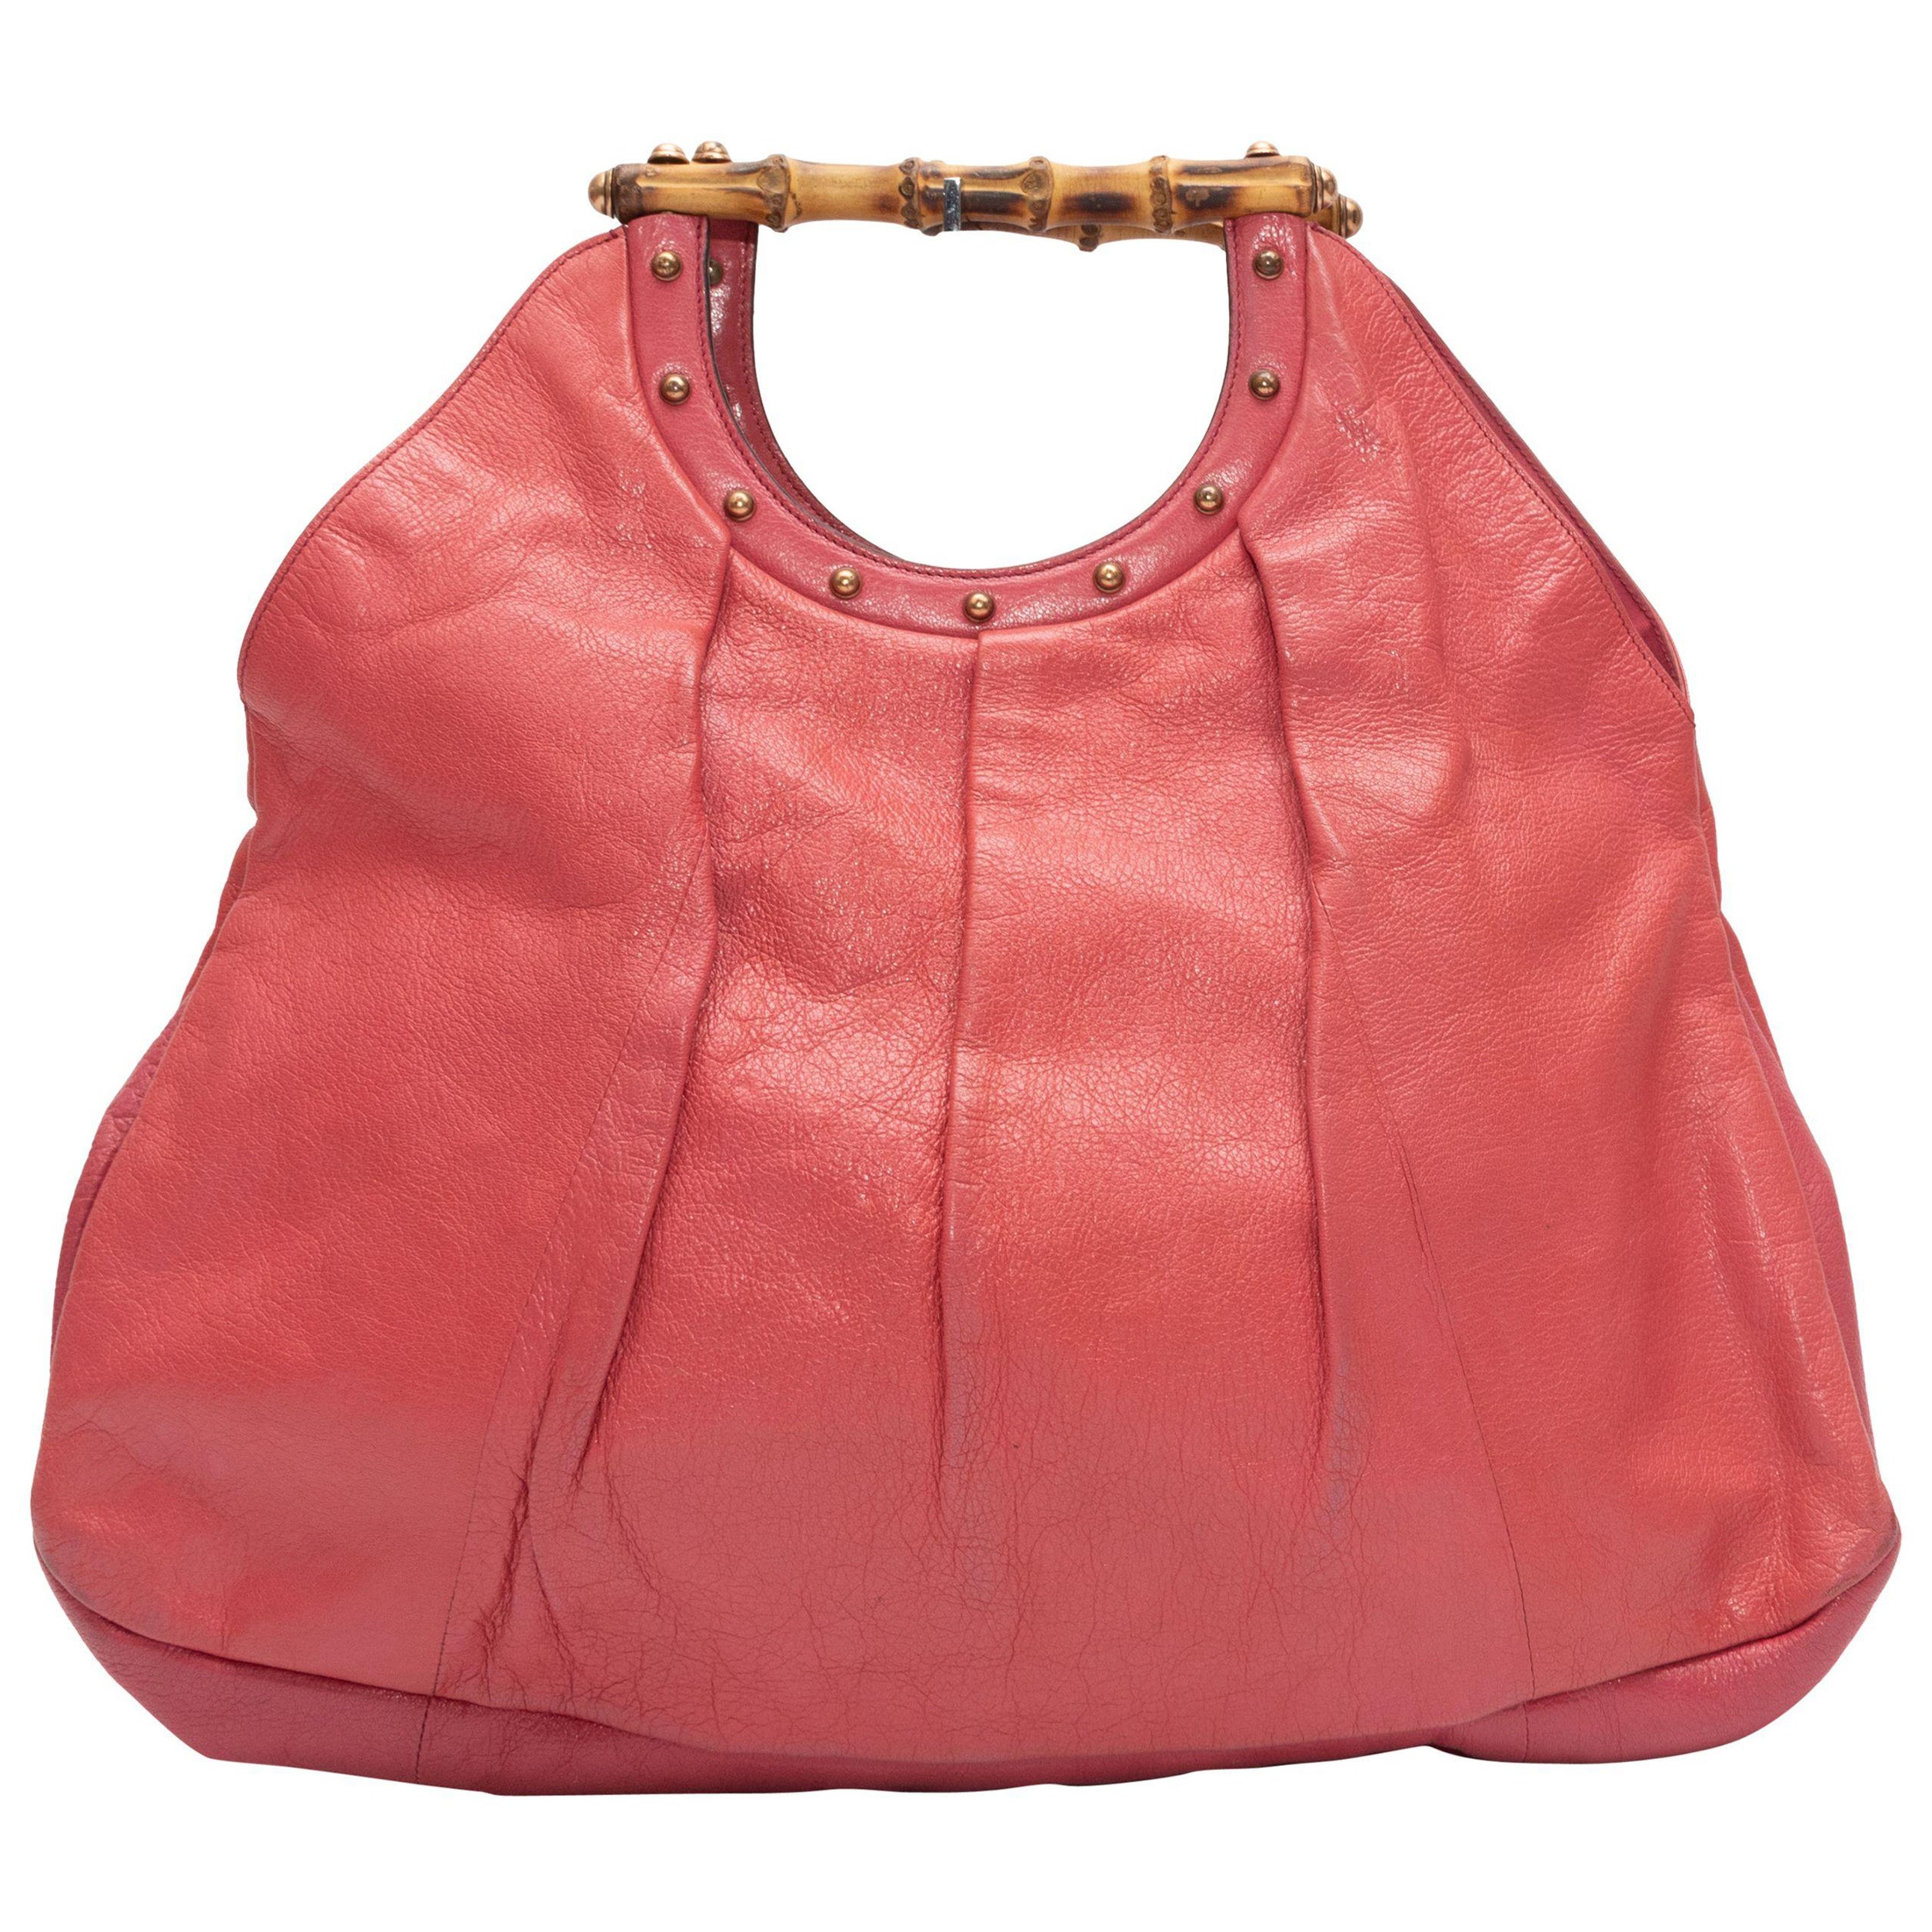 Gucci Pink Leather & Bamboo Handbag